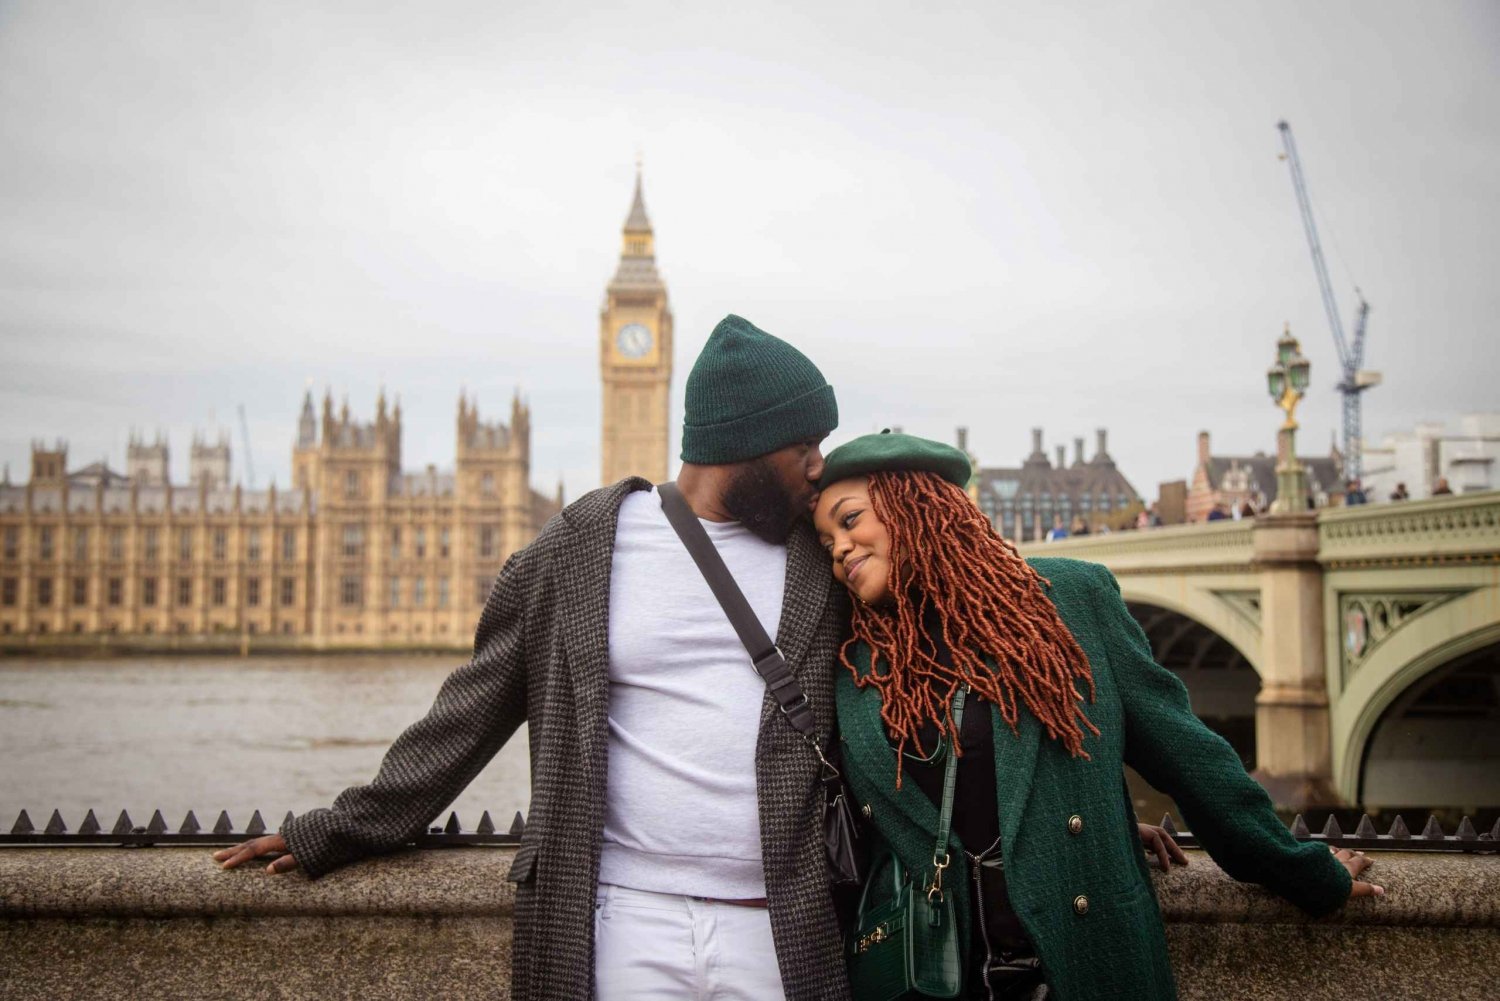 Parrets foto: Romantisk fotoshoot i London